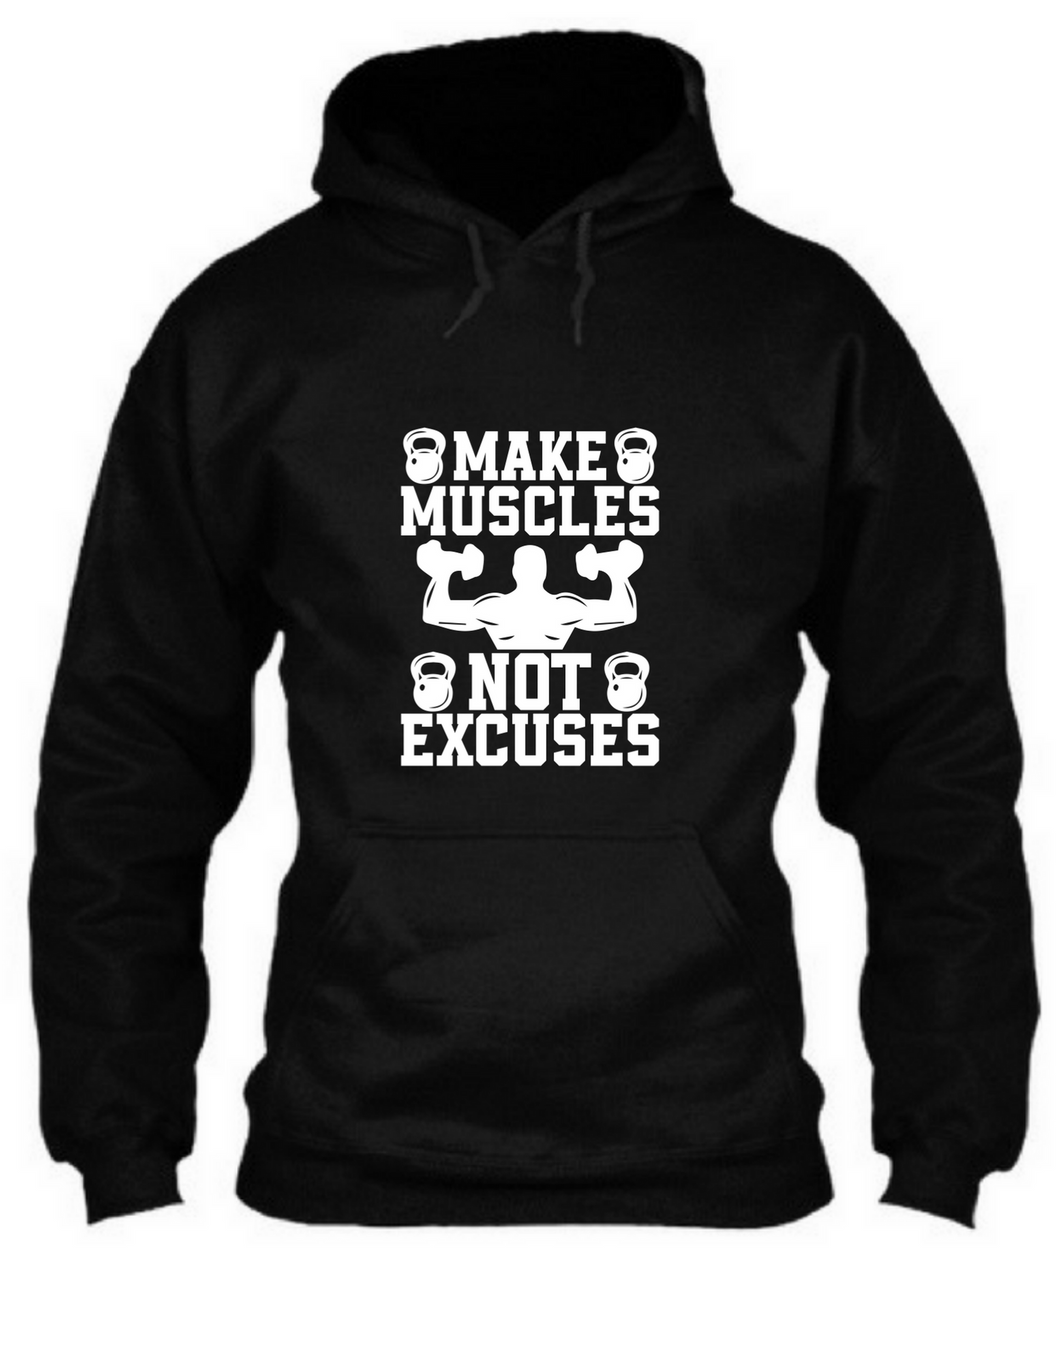 Make muscles not excuses - Unisex Hoodie